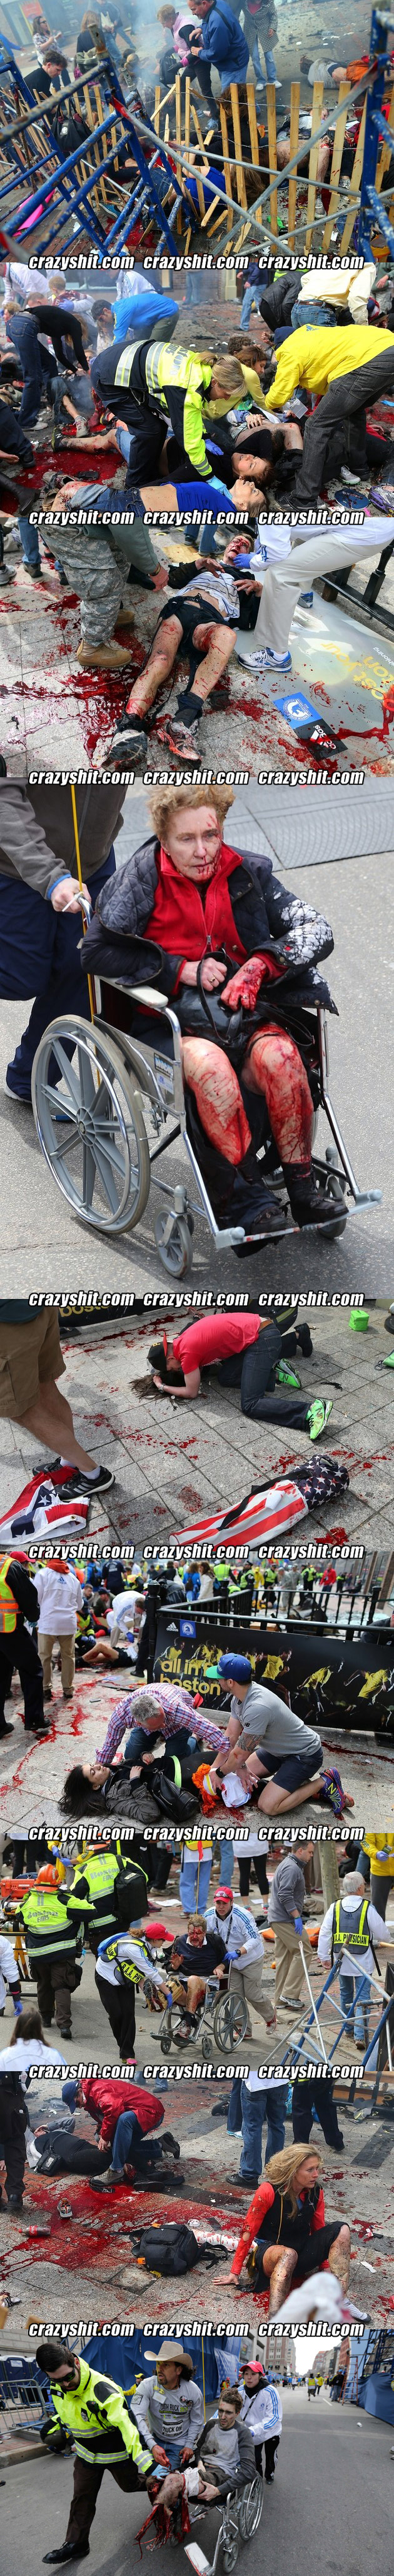 Several Injured At The Boston Marathon Bombing